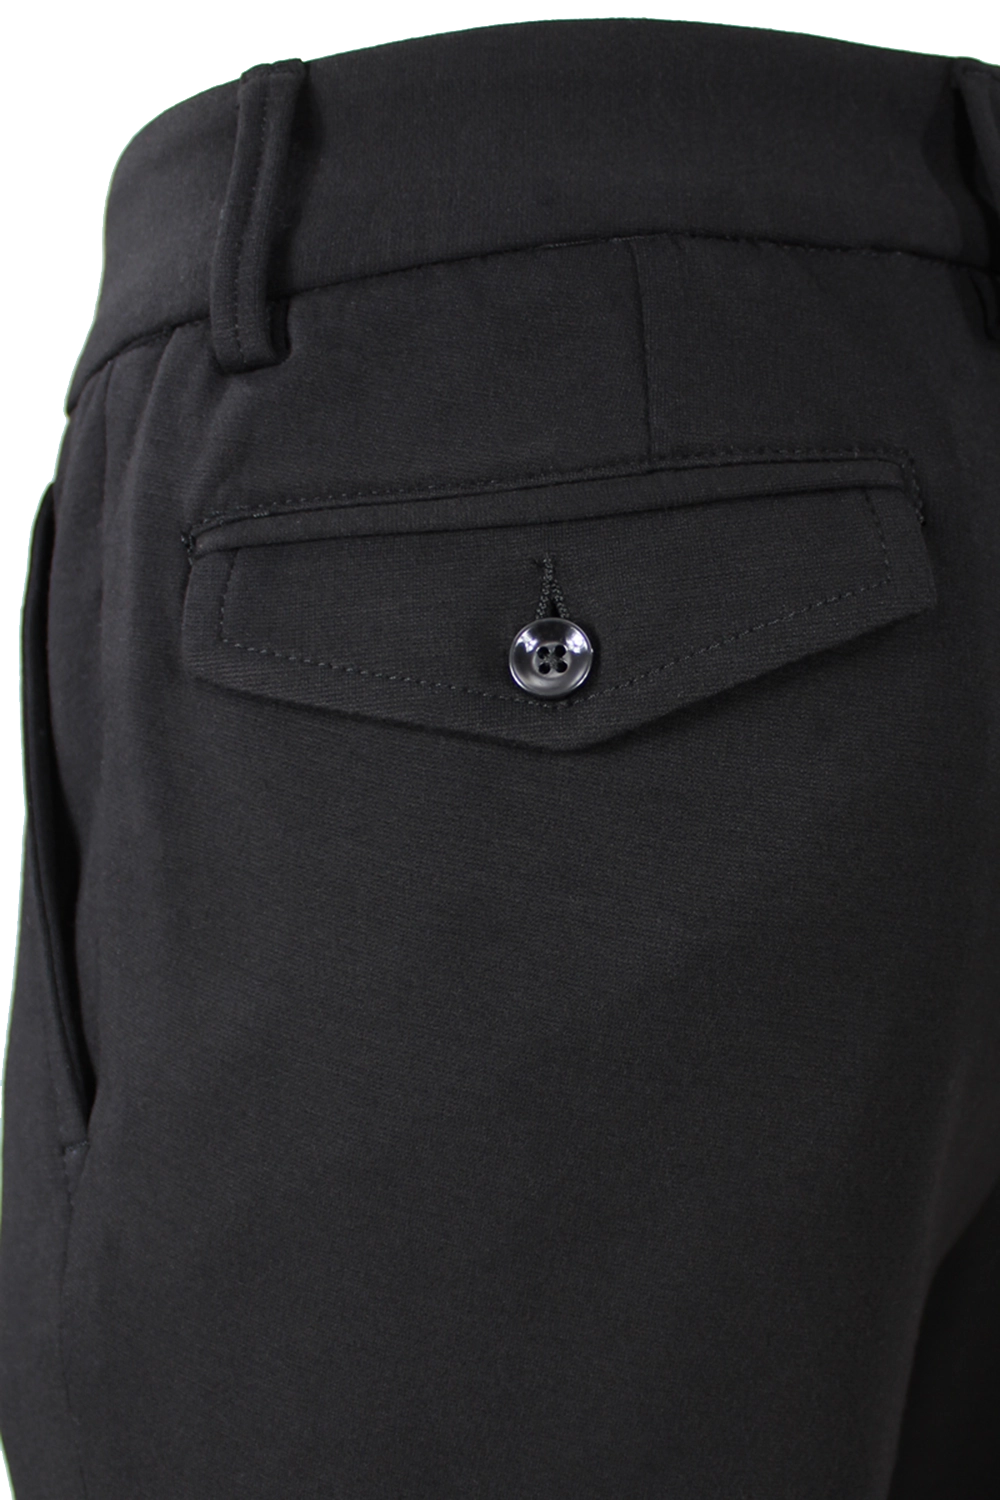 Pantalone con due pinces in jersey nero tasca